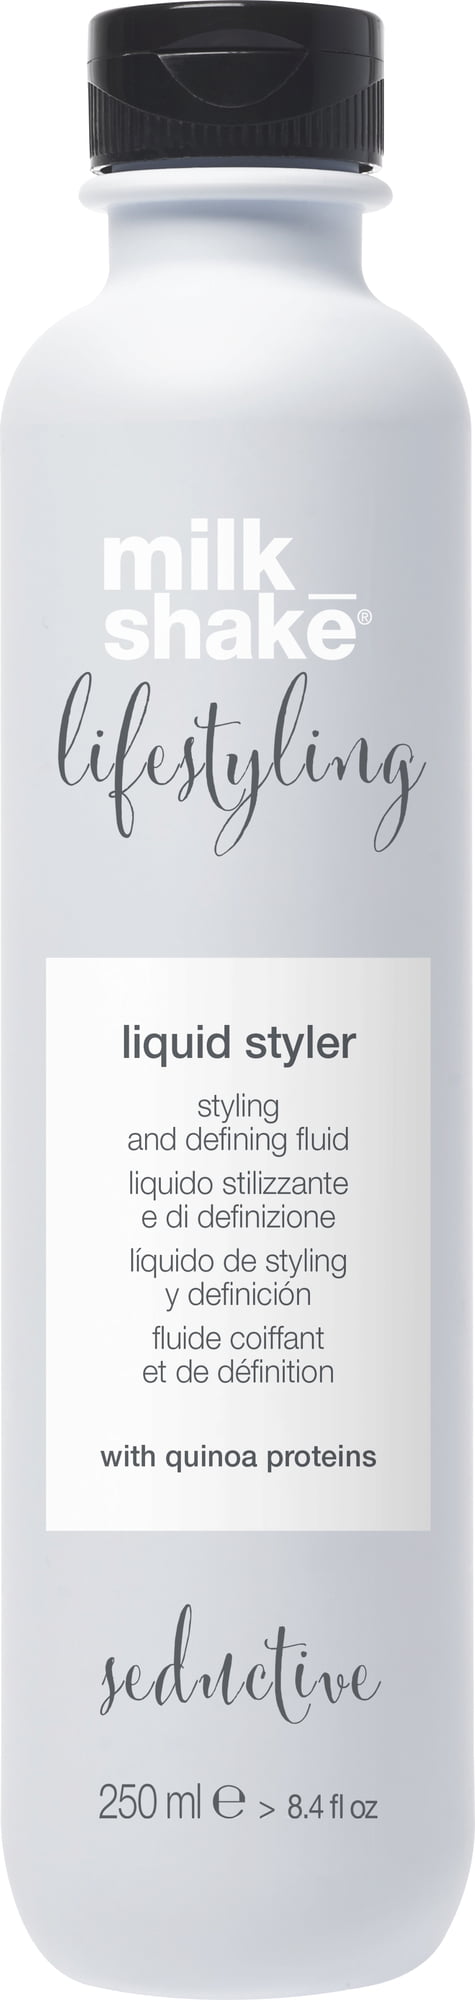 Lifestyling Liquid Styler Seducente 250 Ml